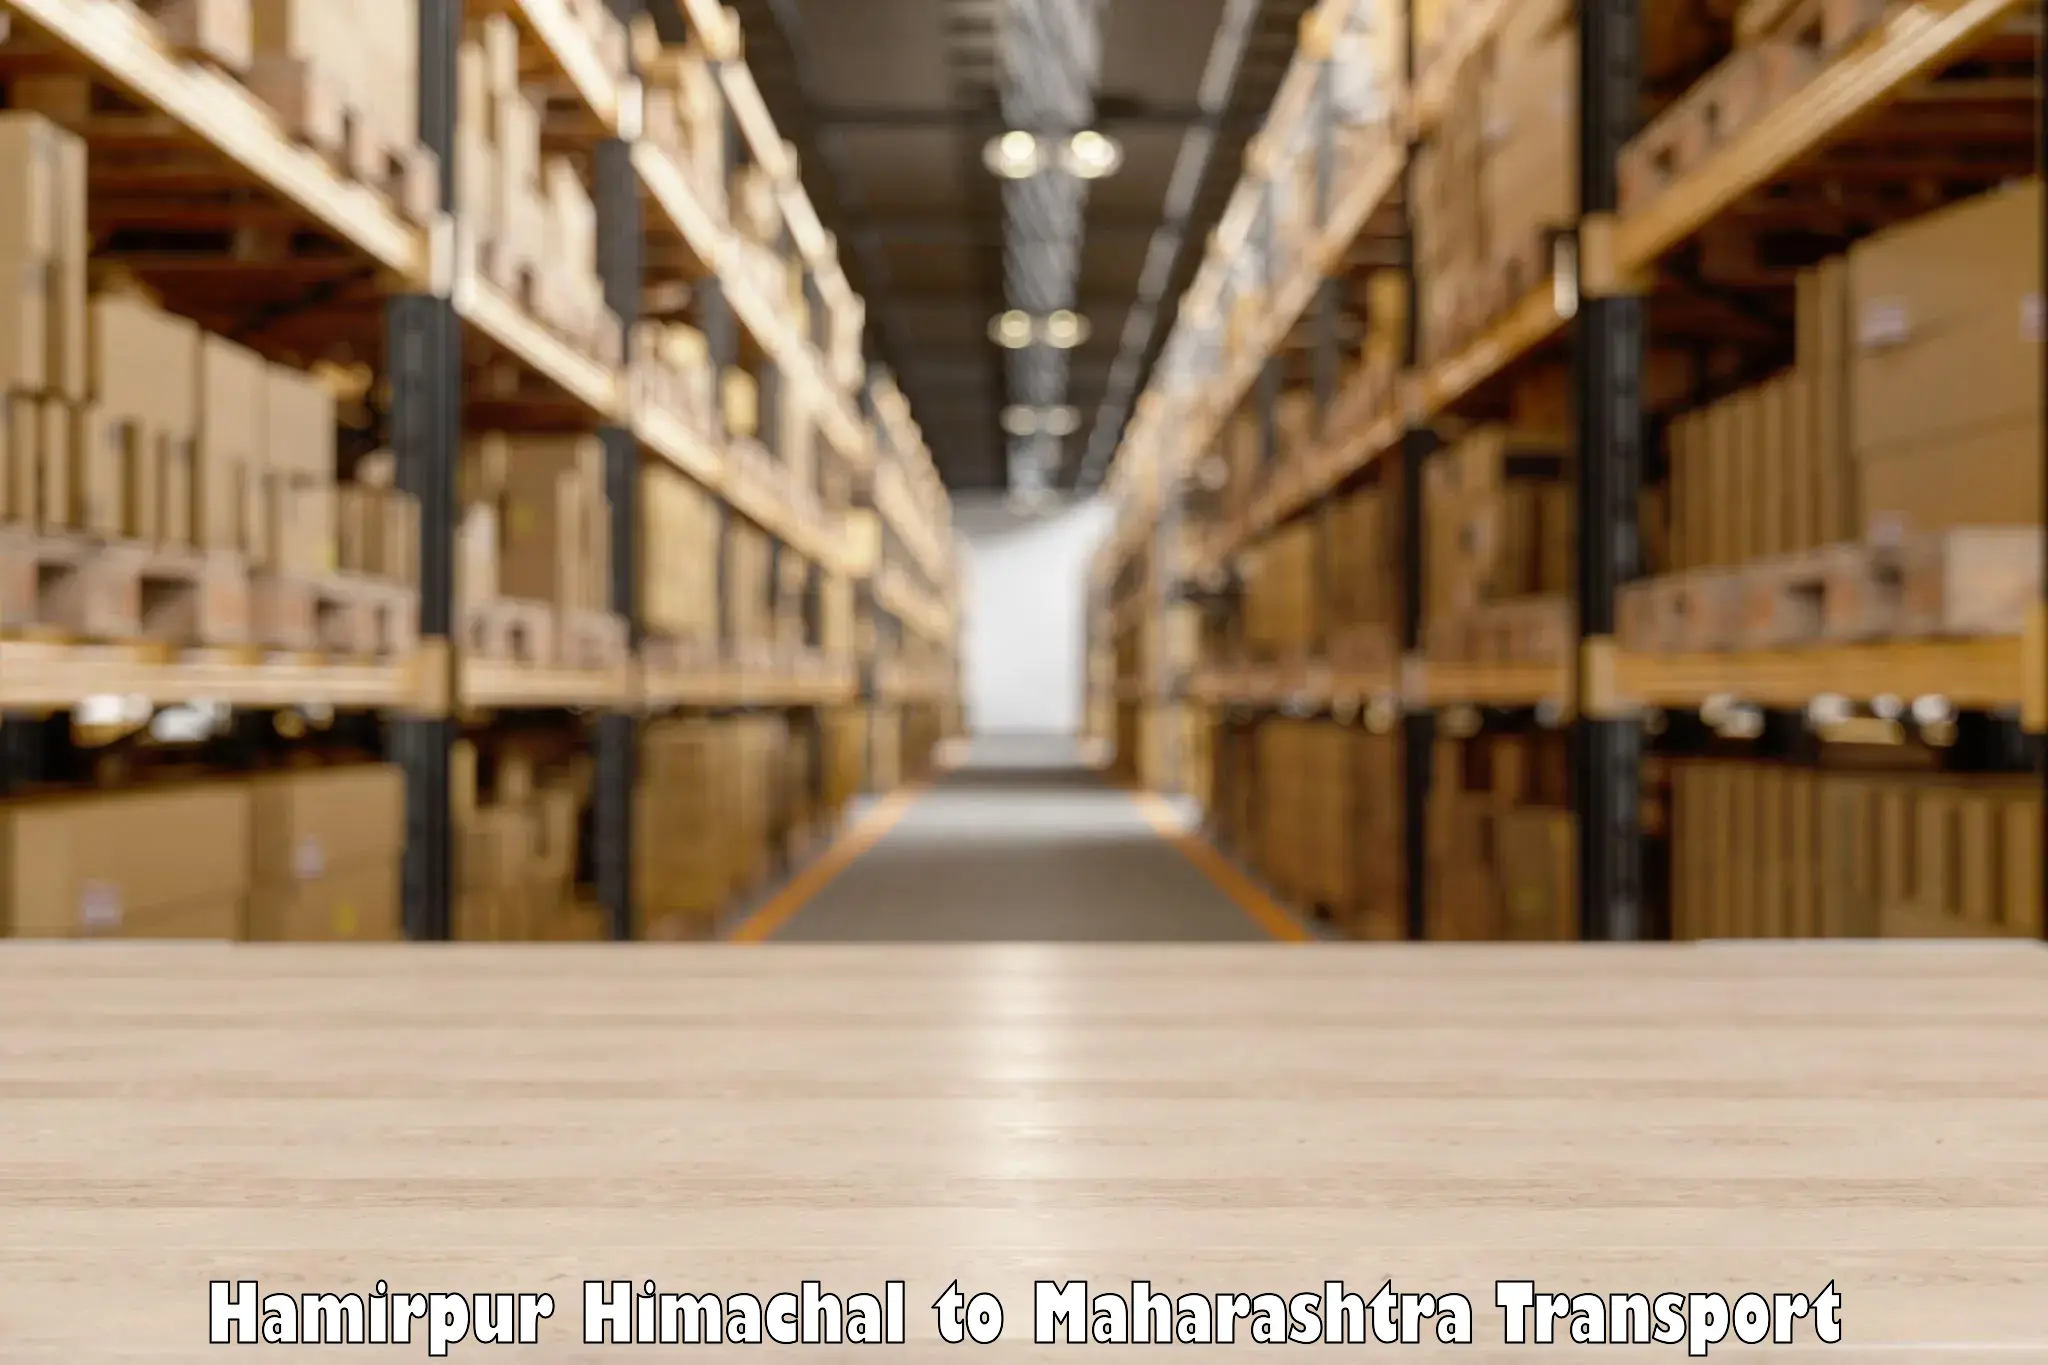 Container transport service Hamirpur Himachal to Virar